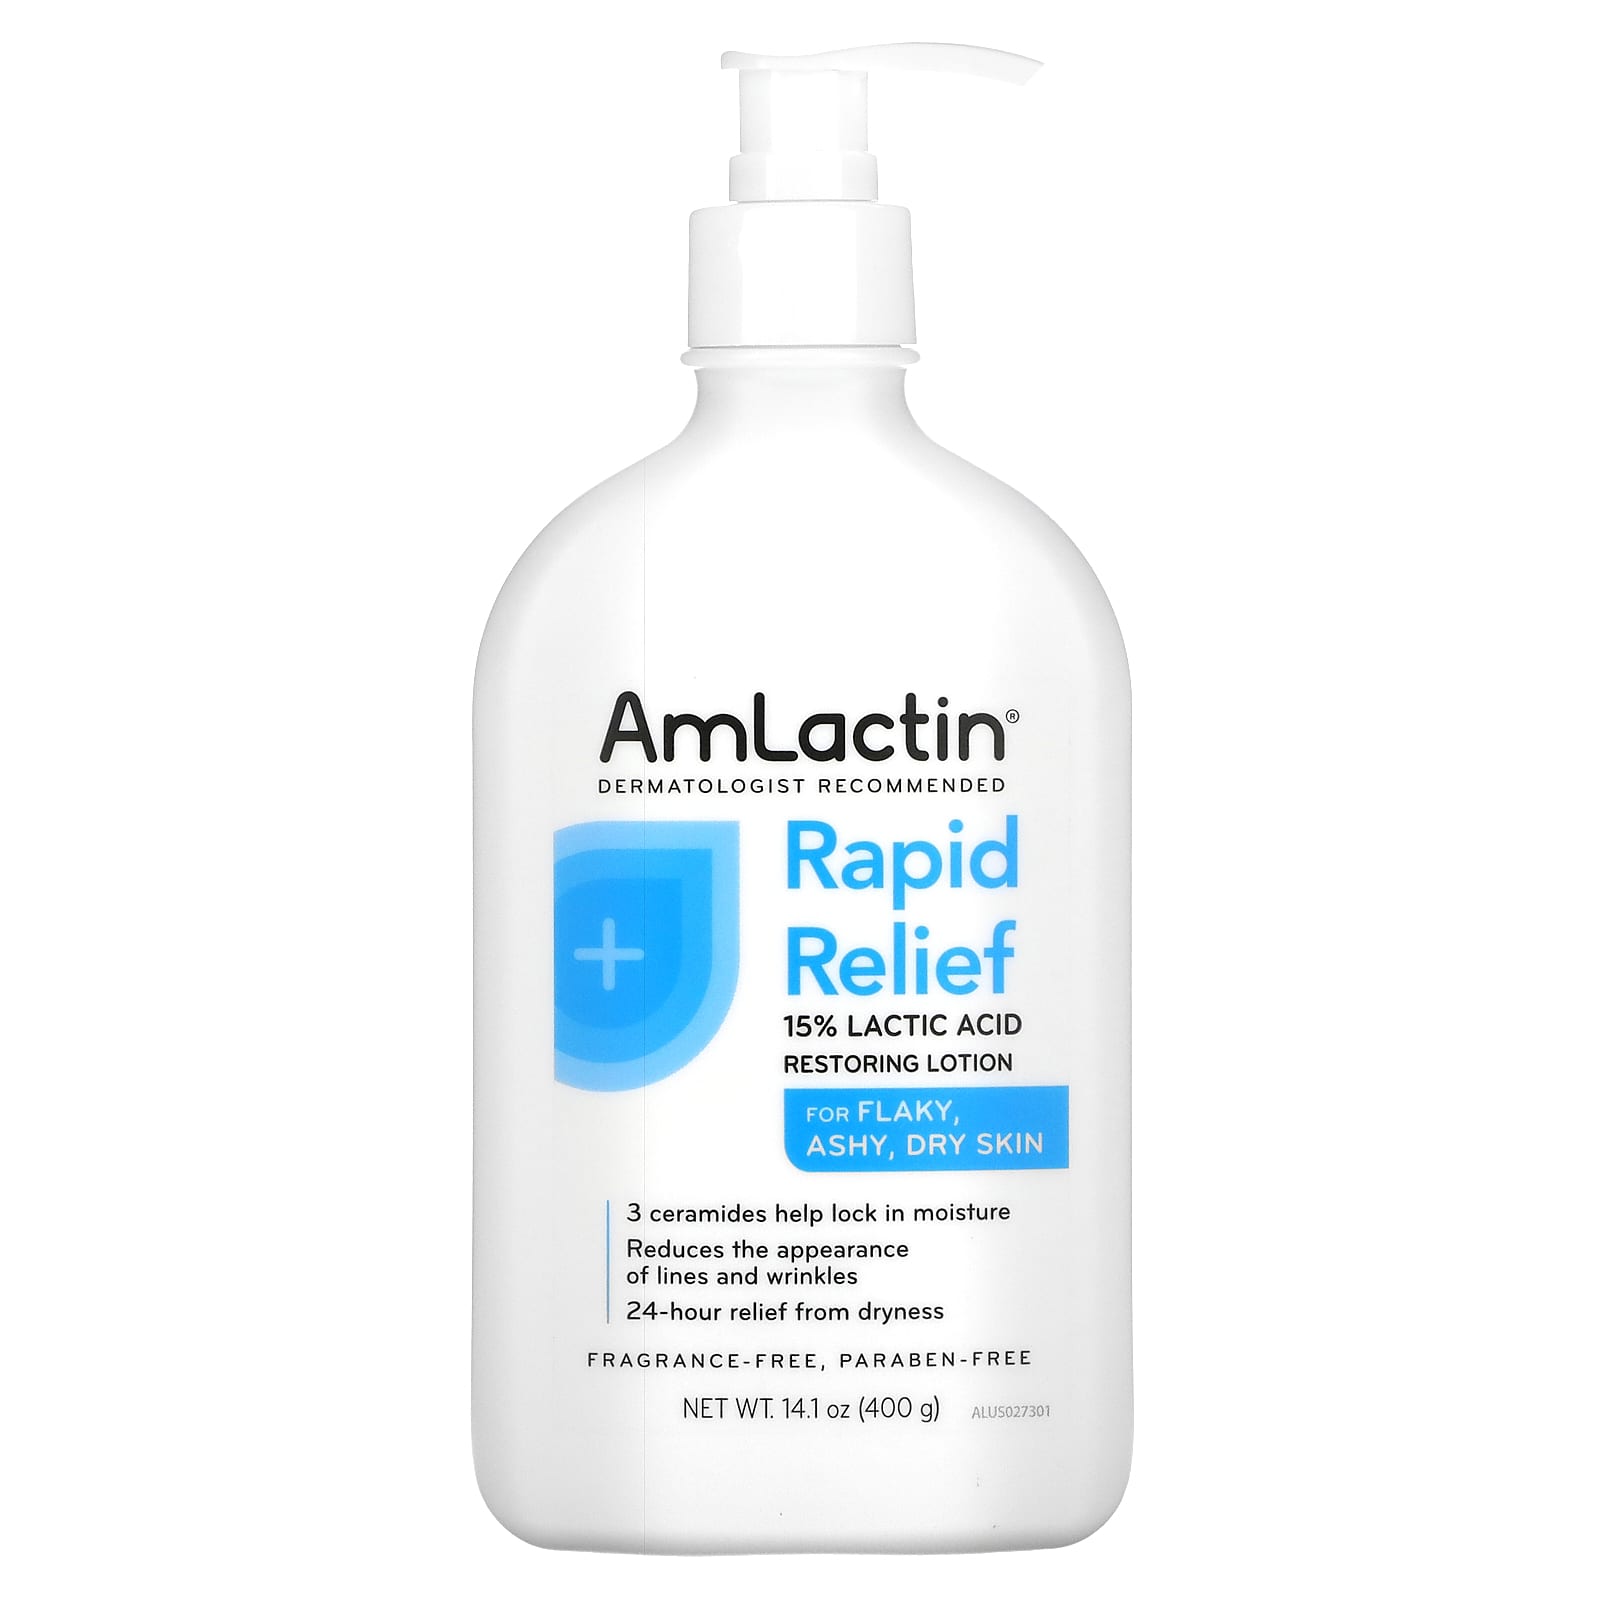 Восстанавливающий Лосьон Amlactin с 15% молочной кислотой, 400 г amlactin rapid relief восстанавливающий лосьон для кожи без отдушки 400 г 14 1 унции